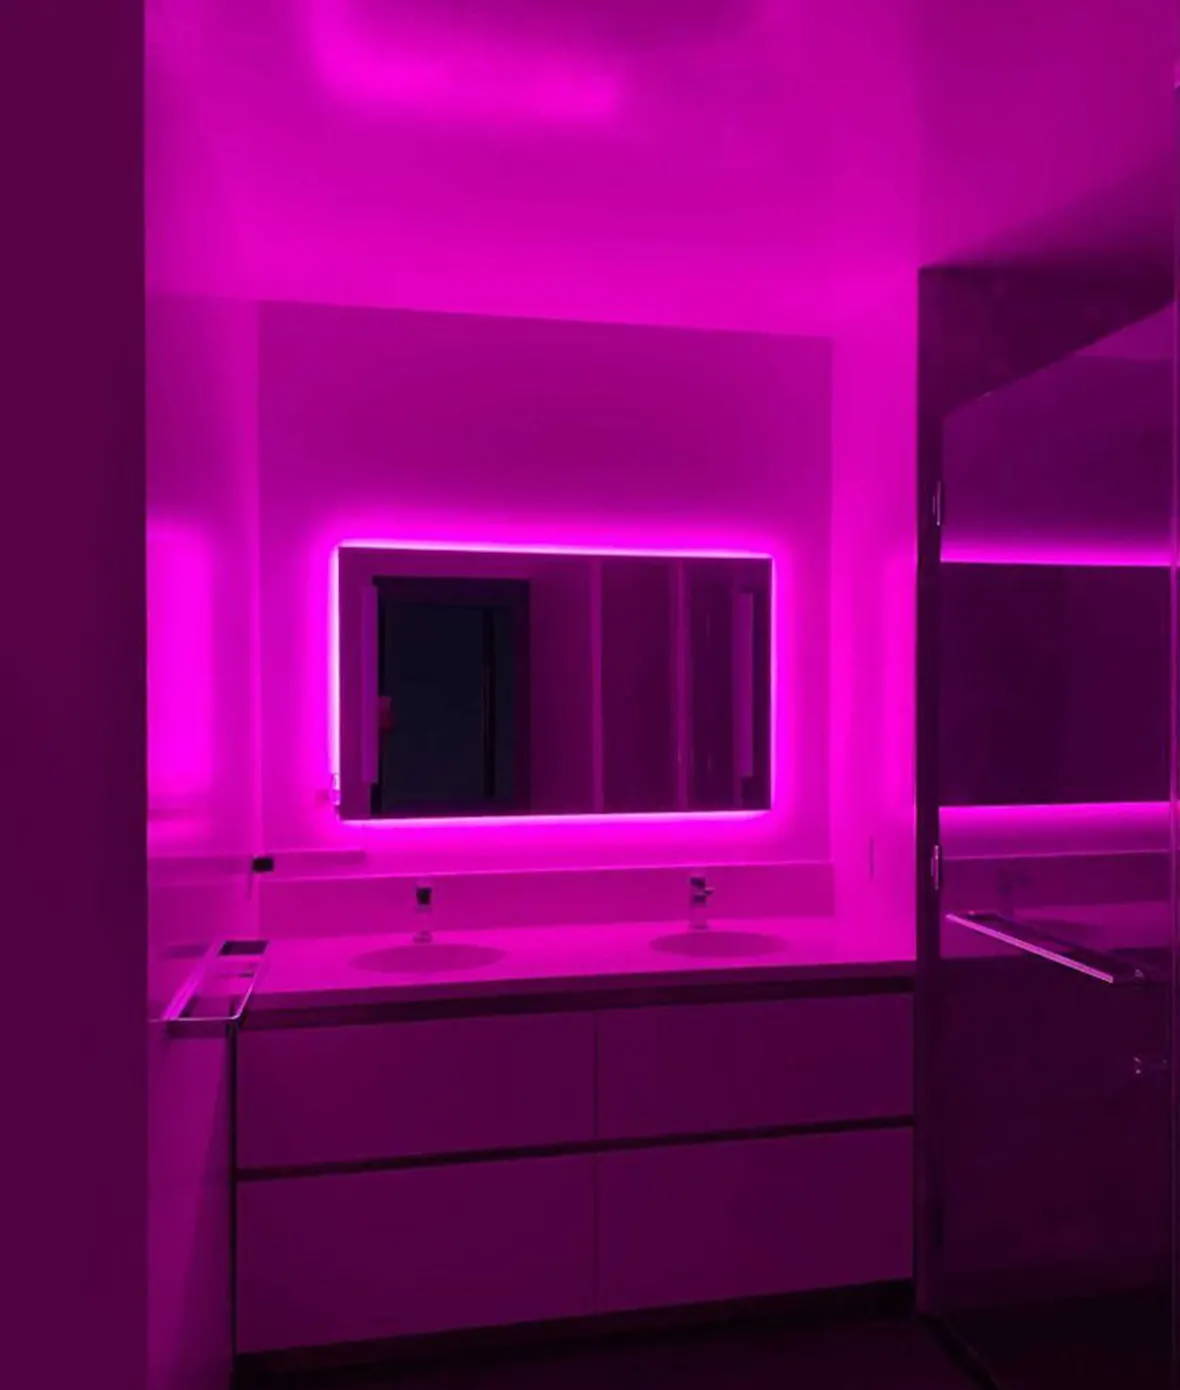 Beautiful RGB backlighting for bathroom mirrors